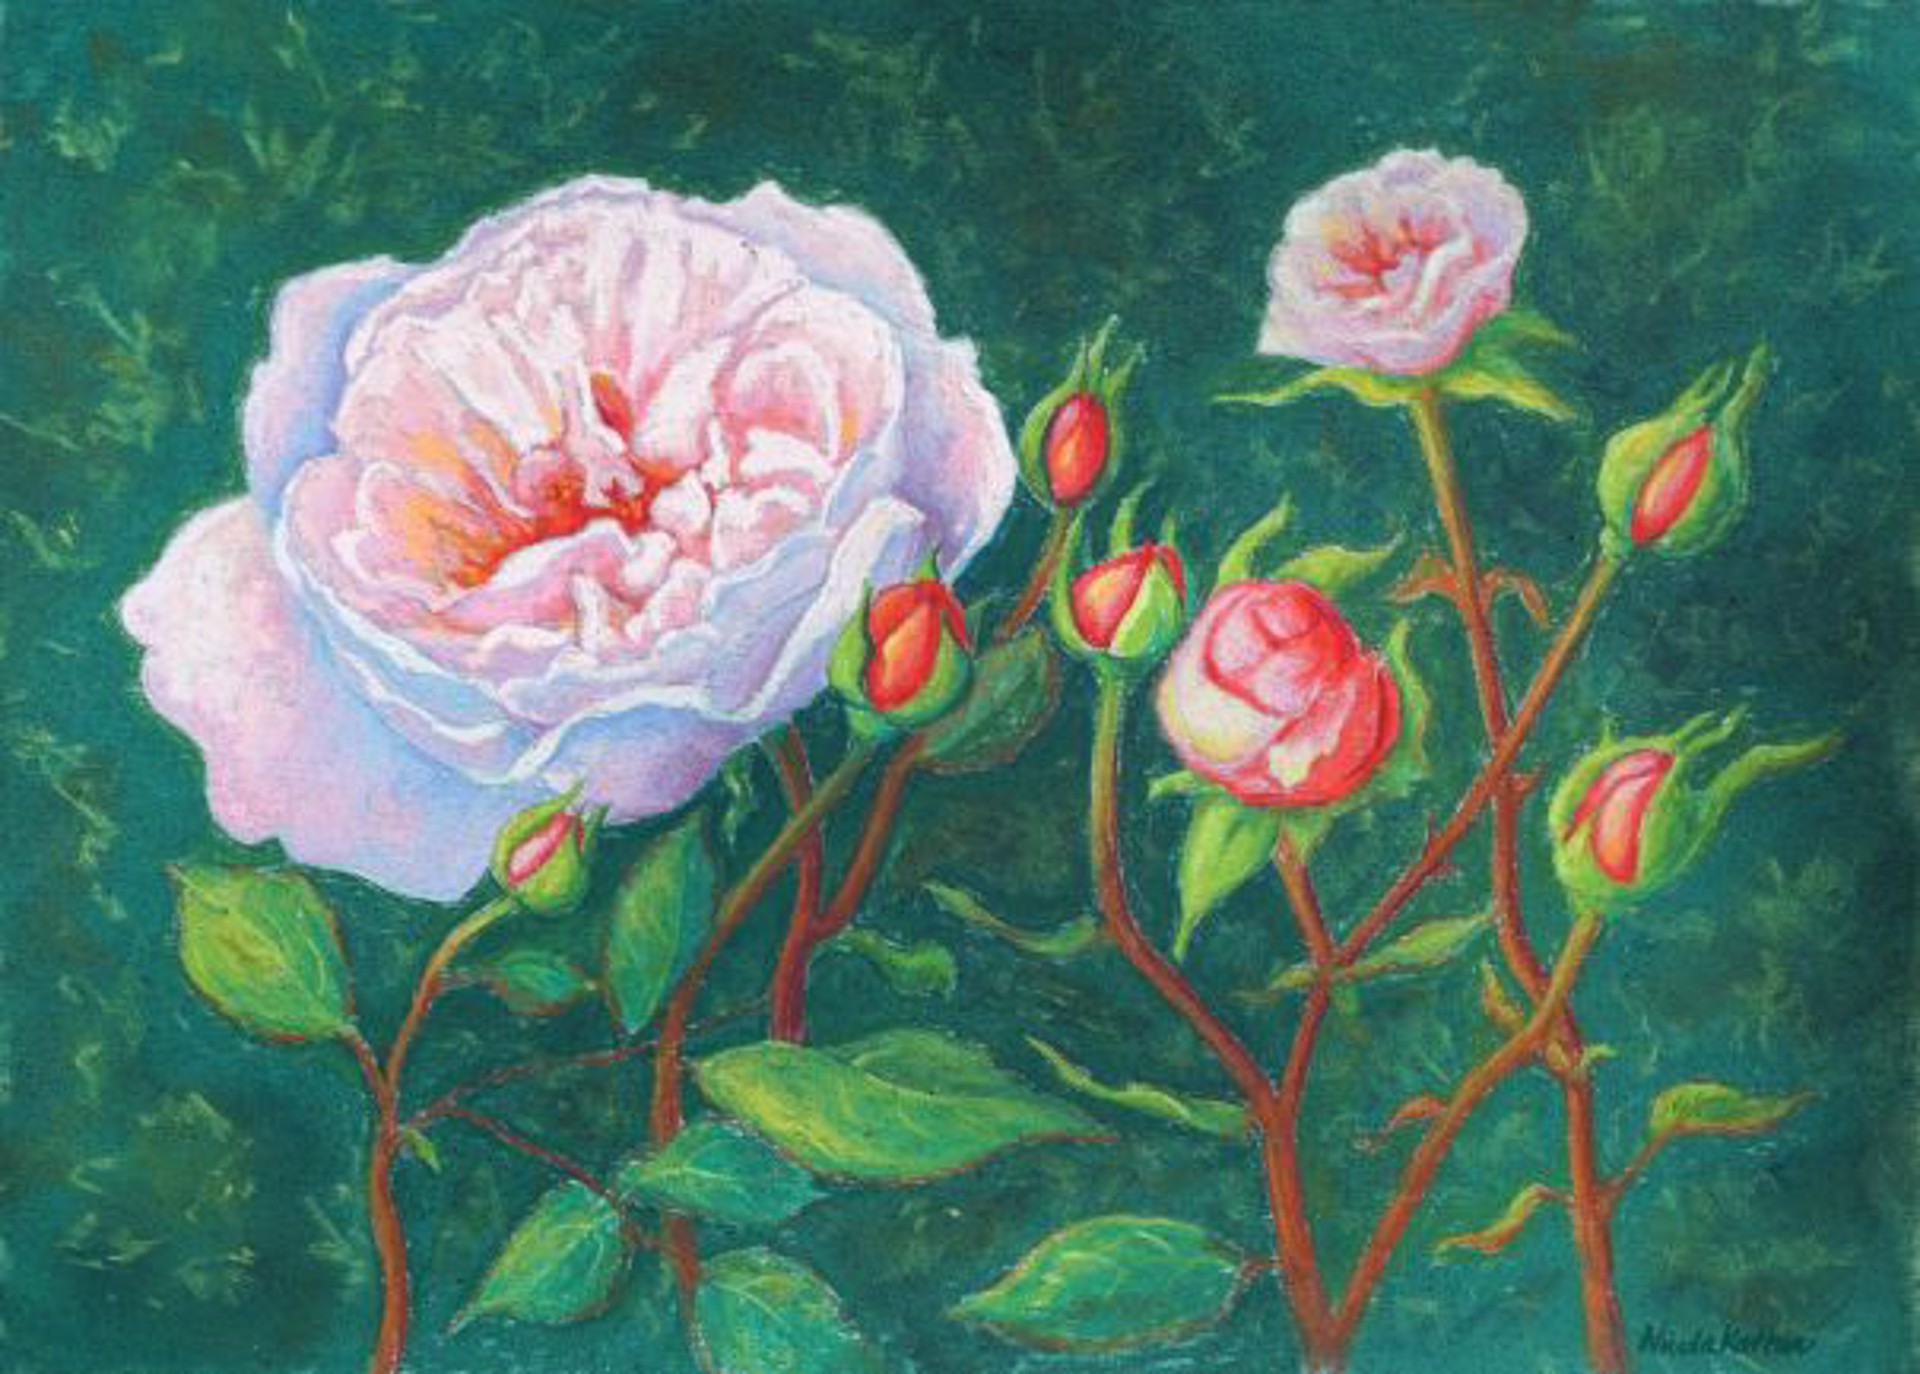 Rose and Rosebuds by Niki Kaftan